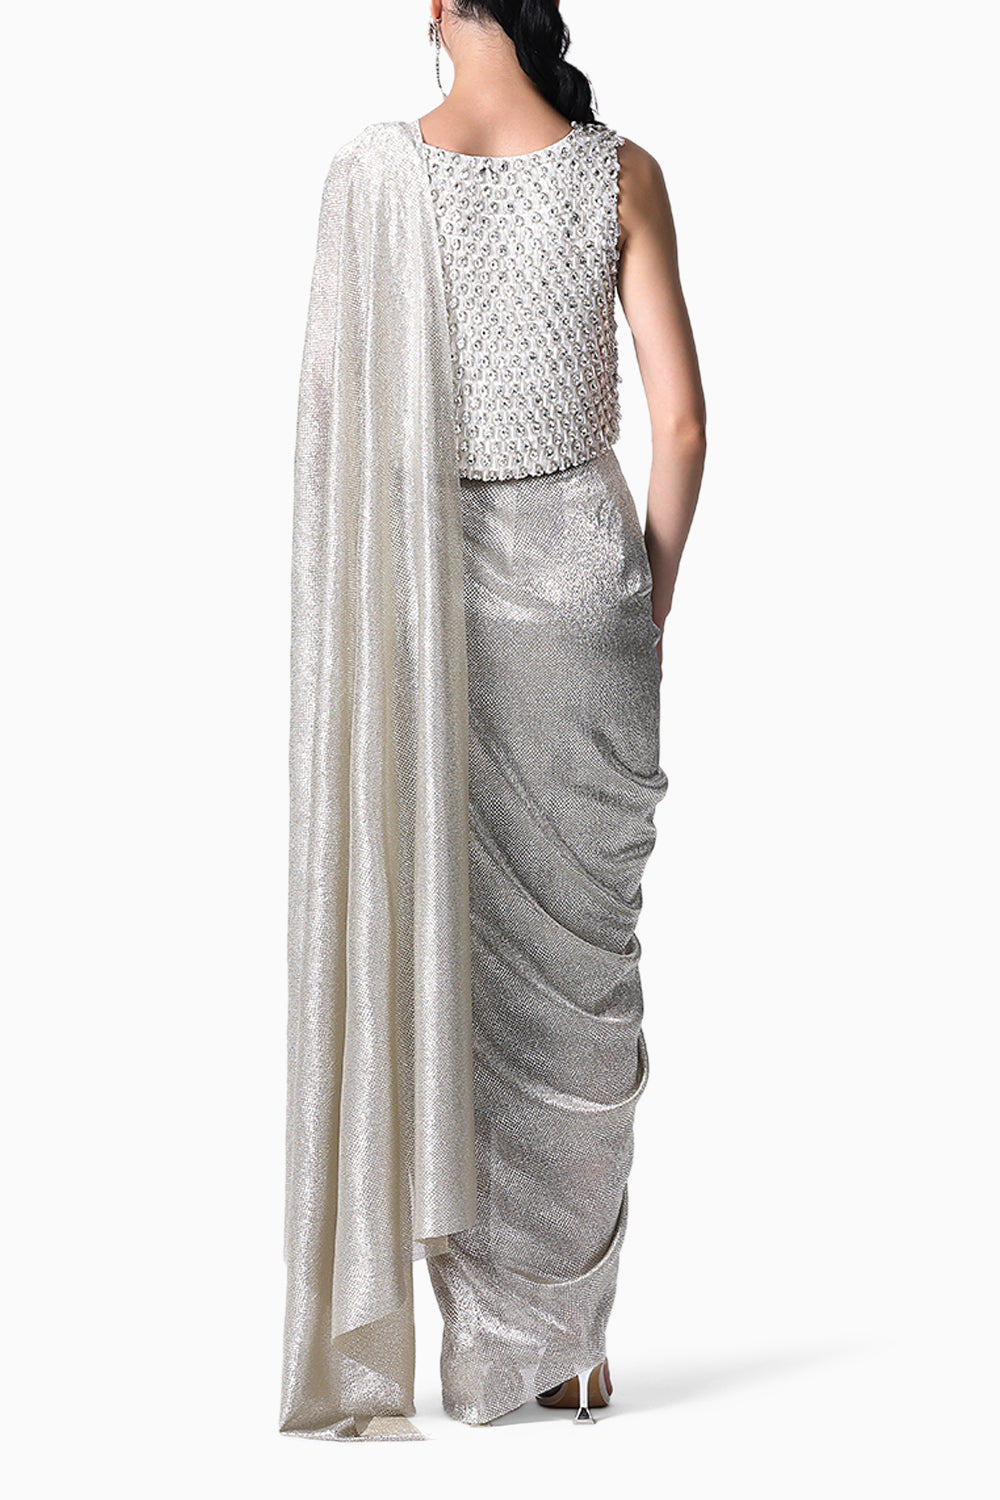 Chandelier Top with Galaxy Sari